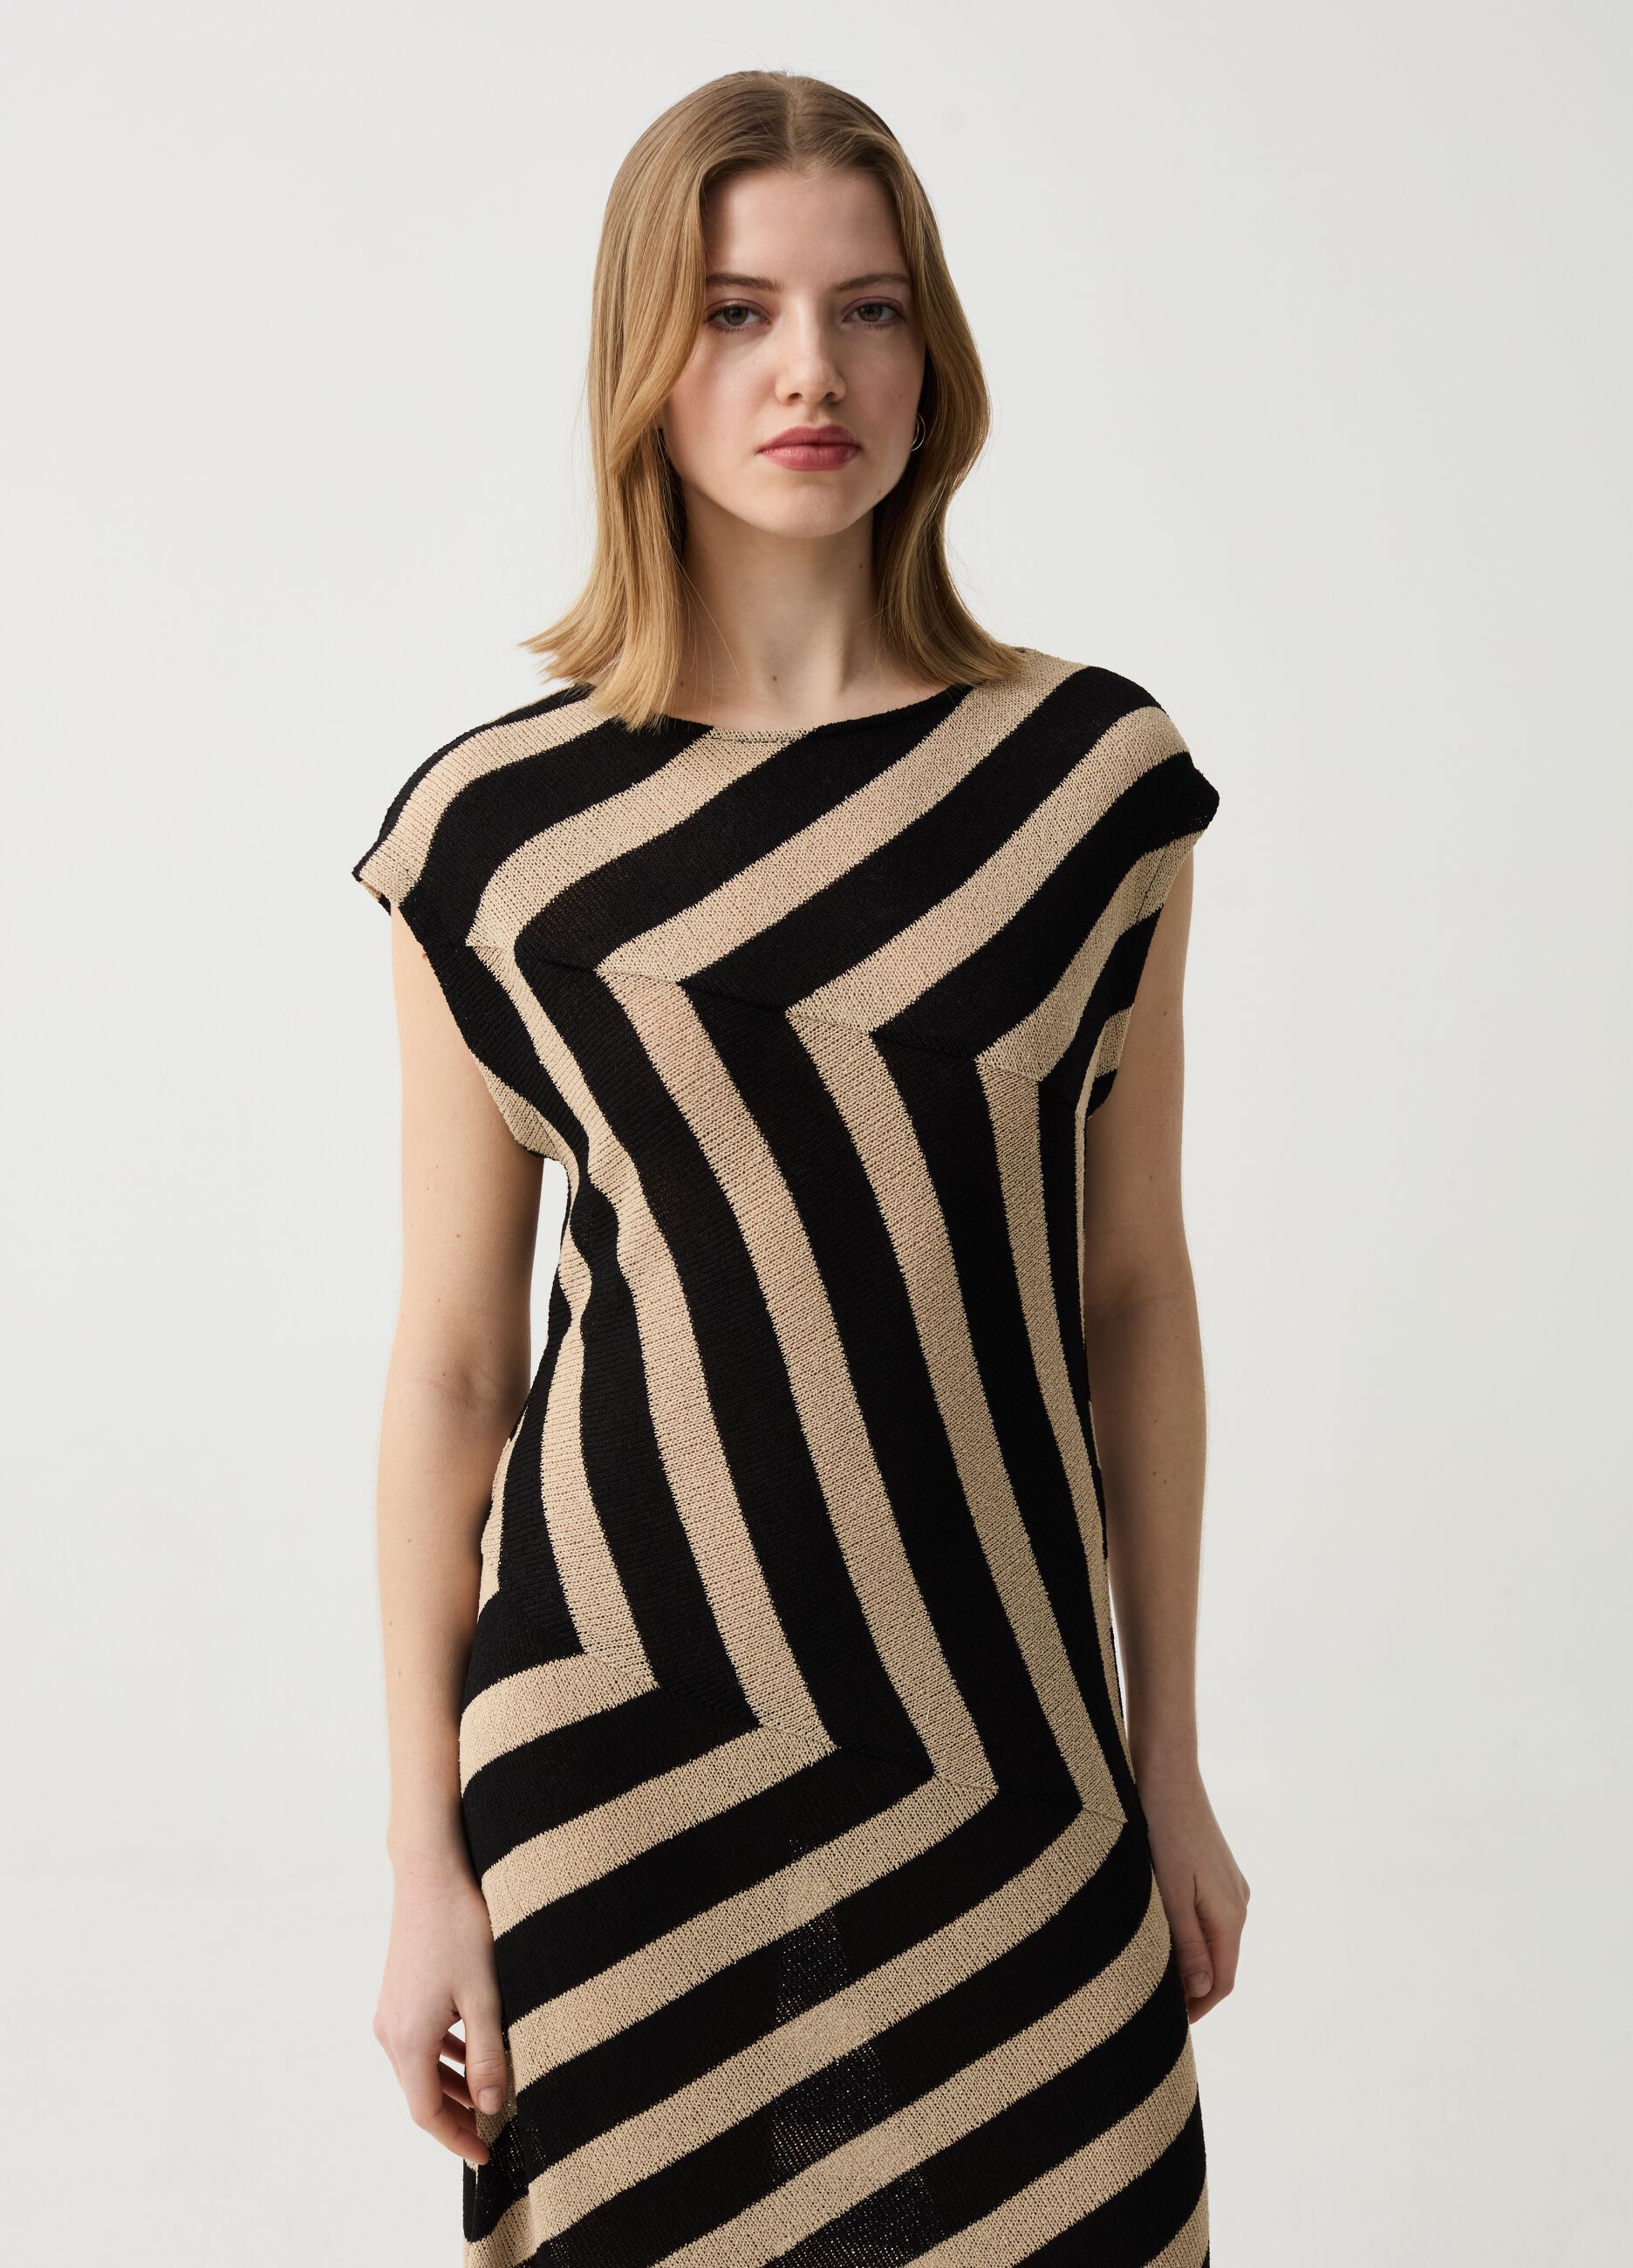 Long sleeveless dress with stripes